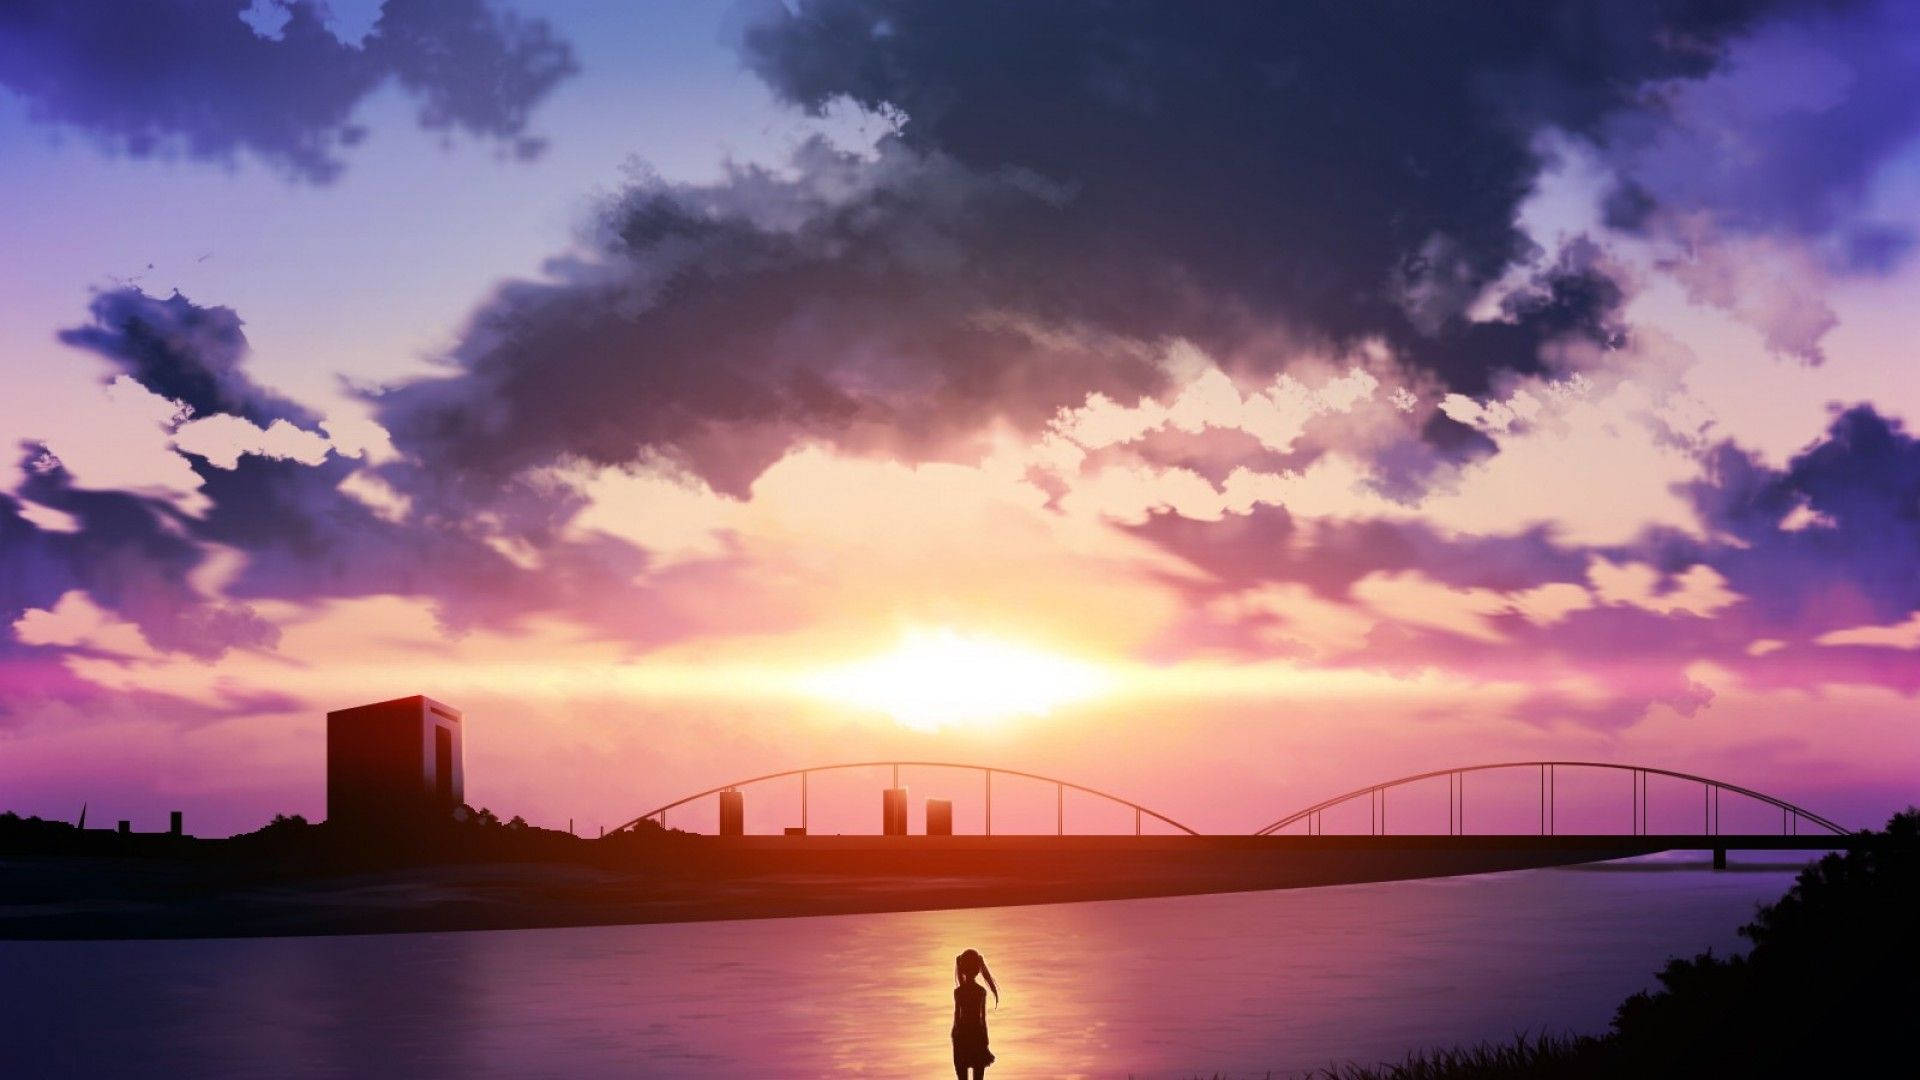 Sunset By The Bridge Anime Scenery Wallpaper